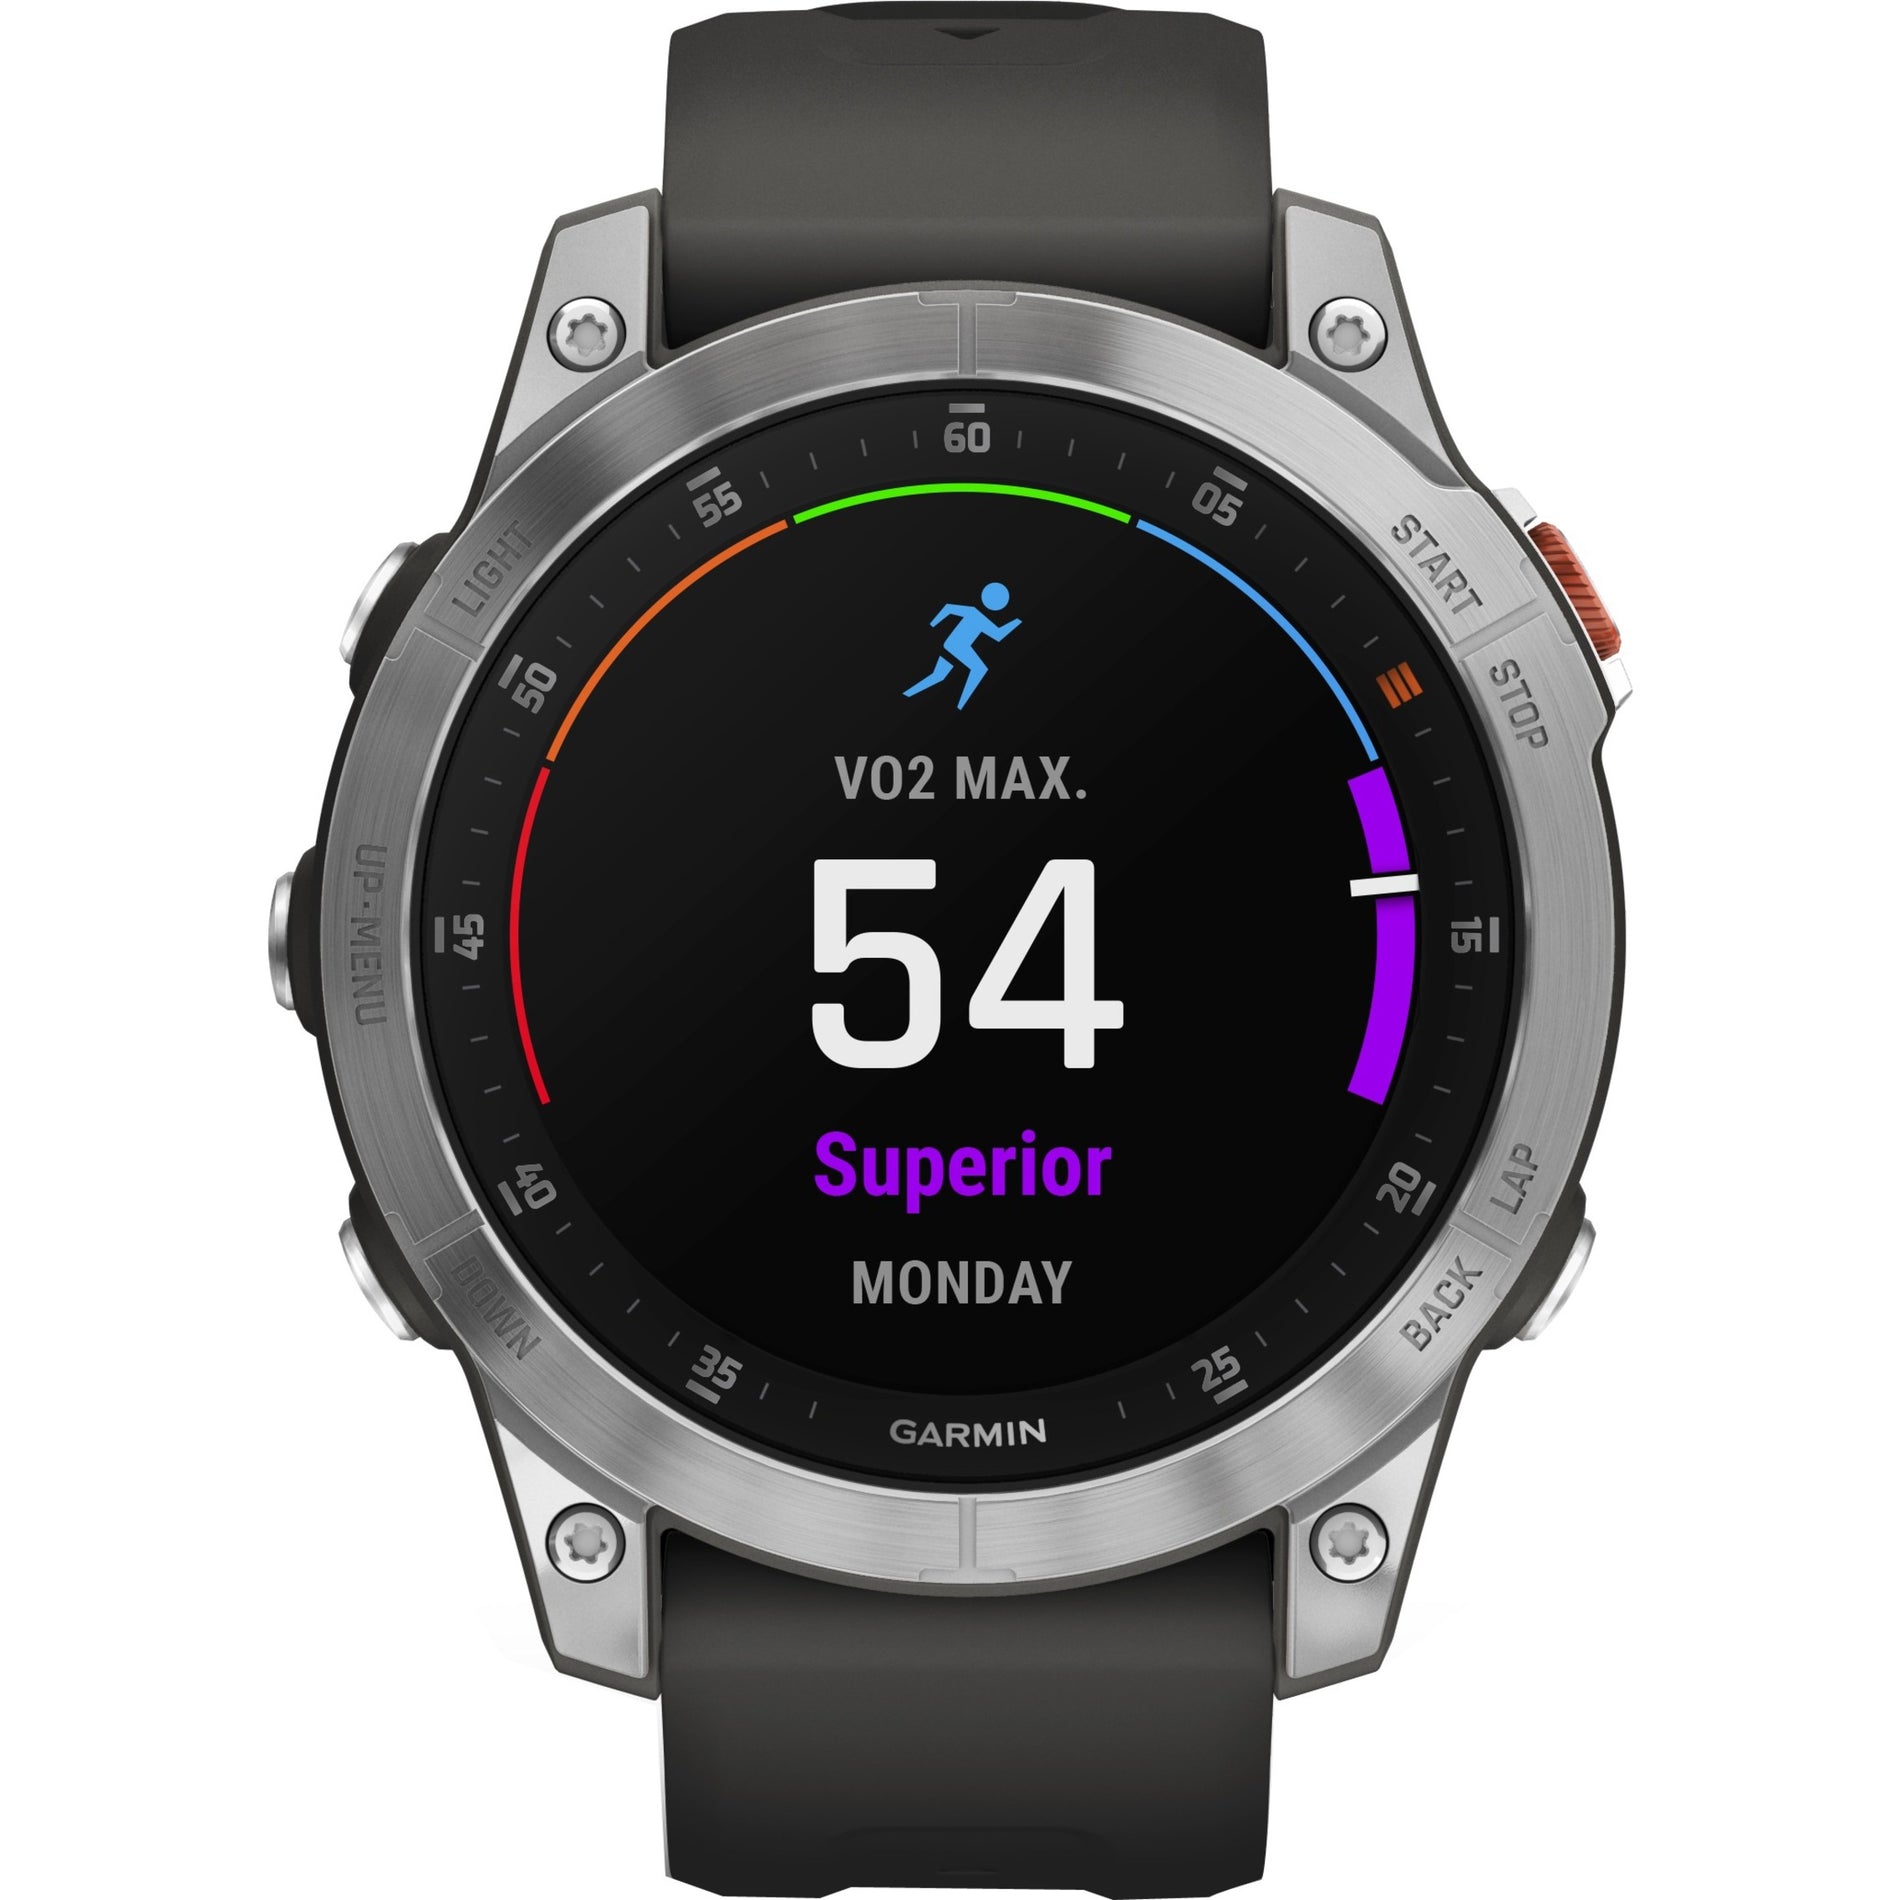 Garmin 010-02582-00 epix Smart Watch, Water Resistant, AMOLED Display, 1.3" Screen, 16GB Memory, 1 Year Warranty [Discontinued]